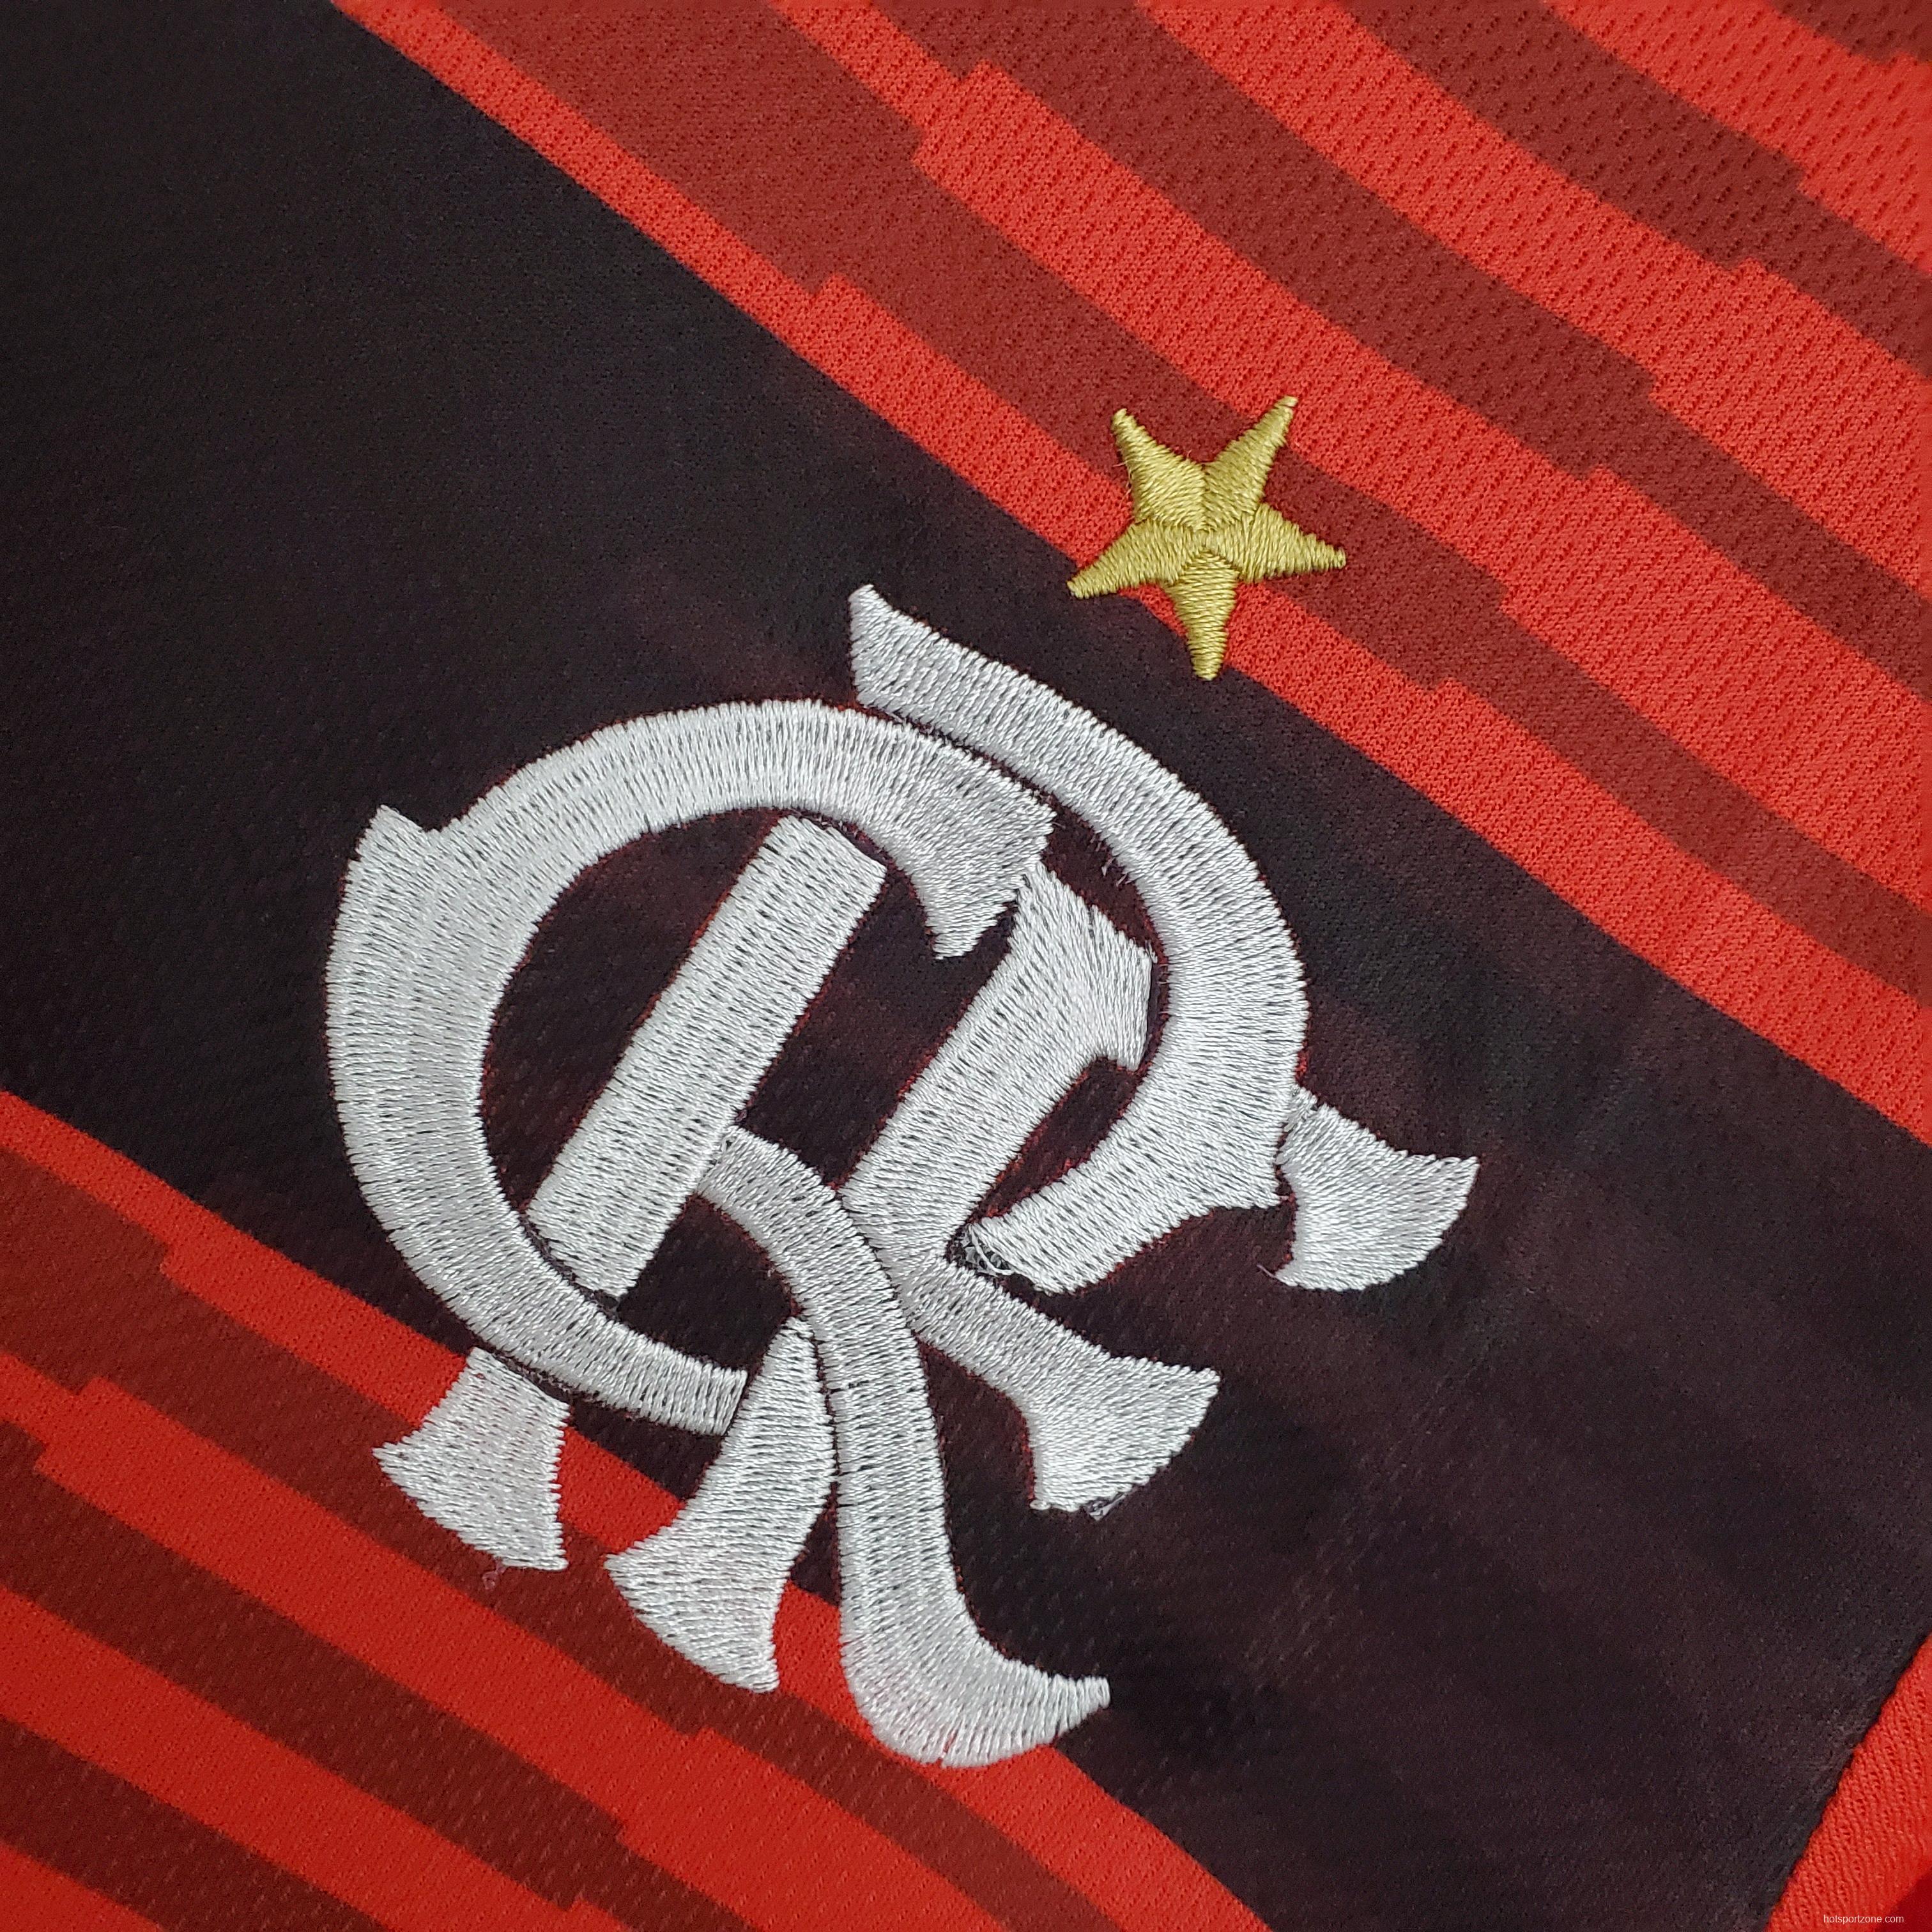 Retro 18/19 Flamengo home Soccer Jersey